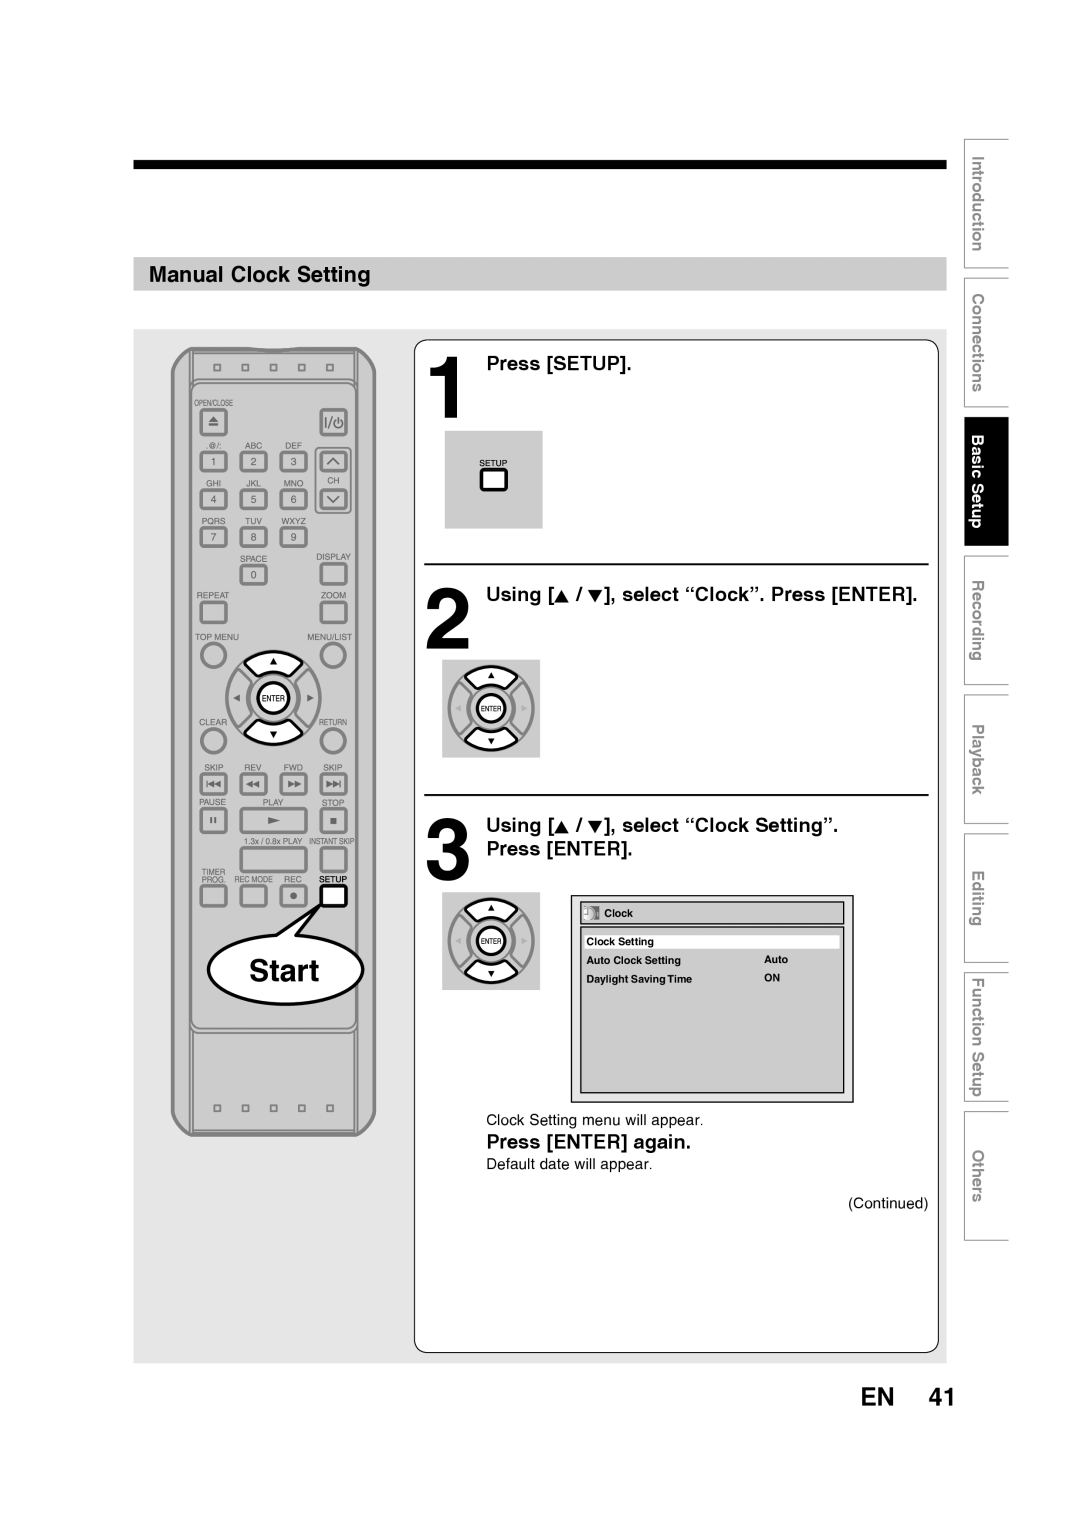 Toshiba D-RW2SU/D-RW2SC Manual Clock Setting, Using K / L, select “Clock Setting” Press ENTER, Press ENTER again, Start 